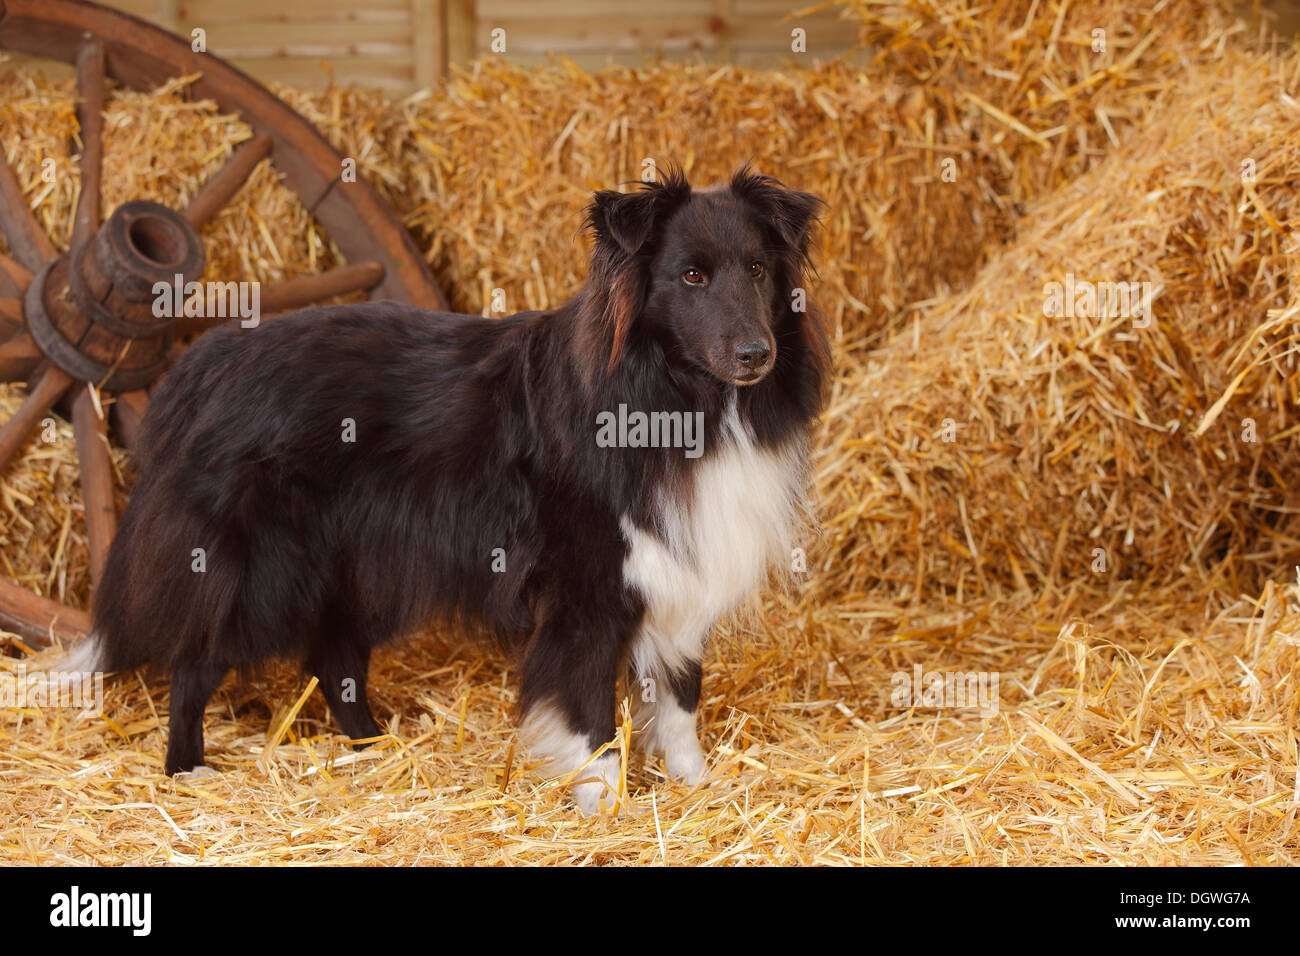 Sheltie, in bianco e nero / Shetland Sheepdog |Sheltie, Ruede, schwarz-weiss / Shetland Sheepdog, alter Hund Foto Stock